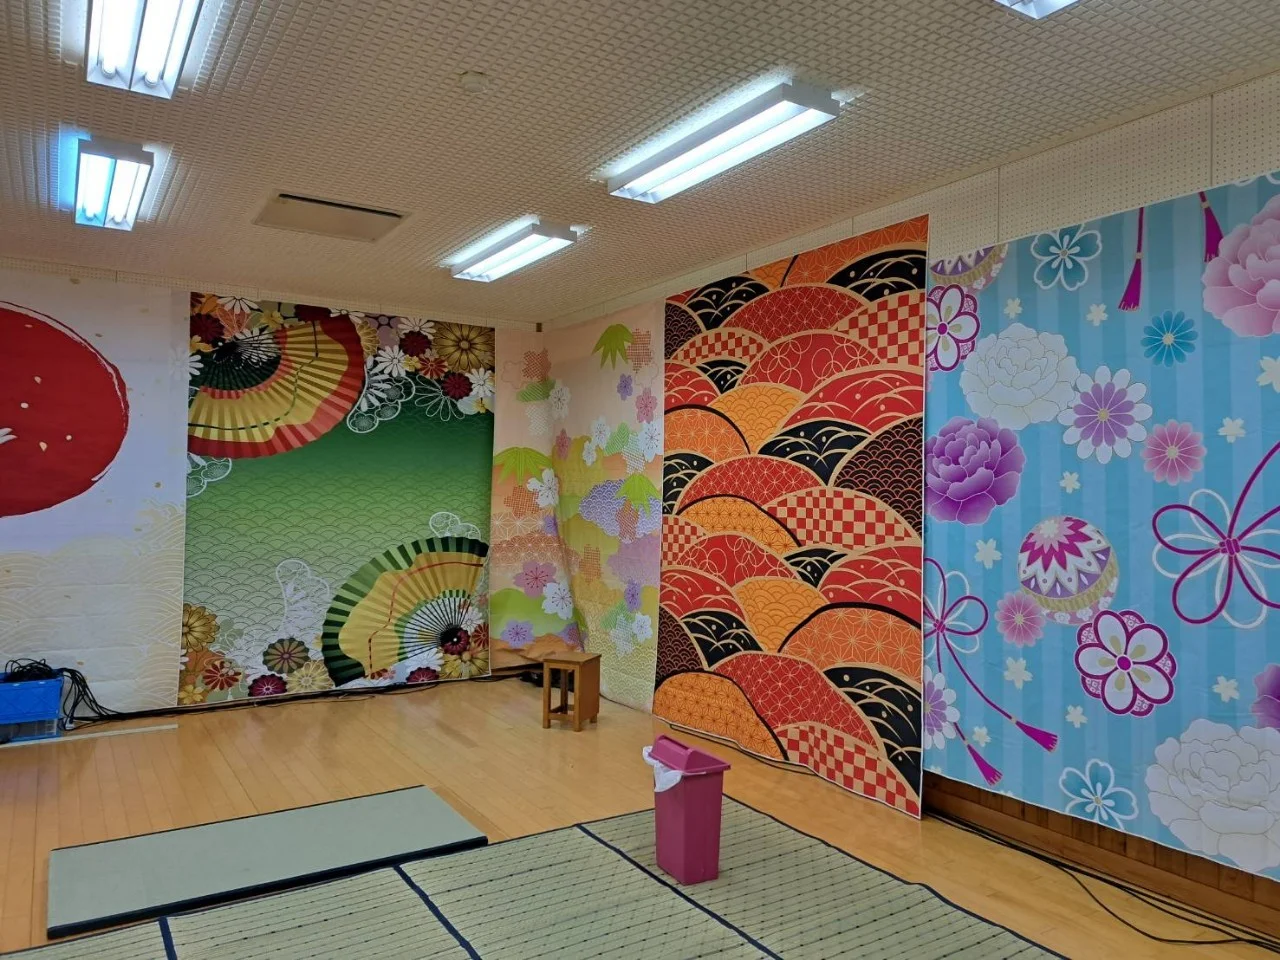 Chiba Kimitsu Rural School Experience 【Free transfer from Shinjuku sta.】